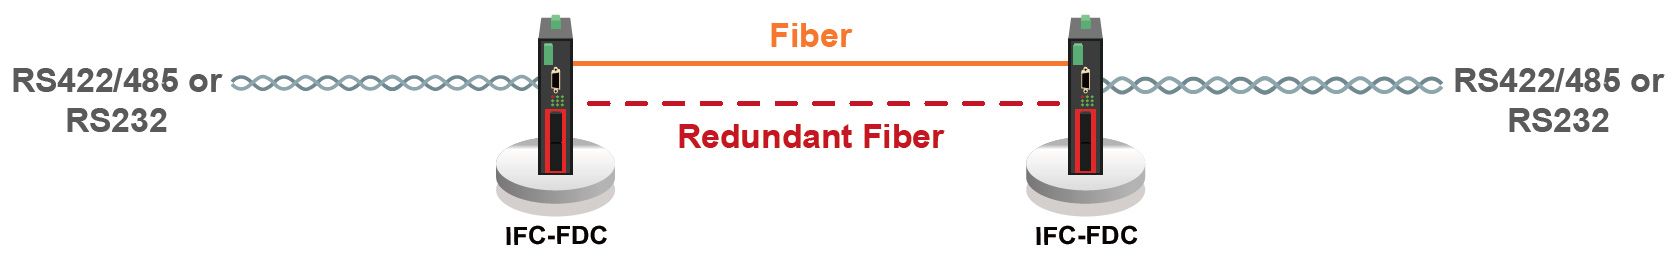 Topología y aplicación punto a punto de fibra redundante IFC-FDC